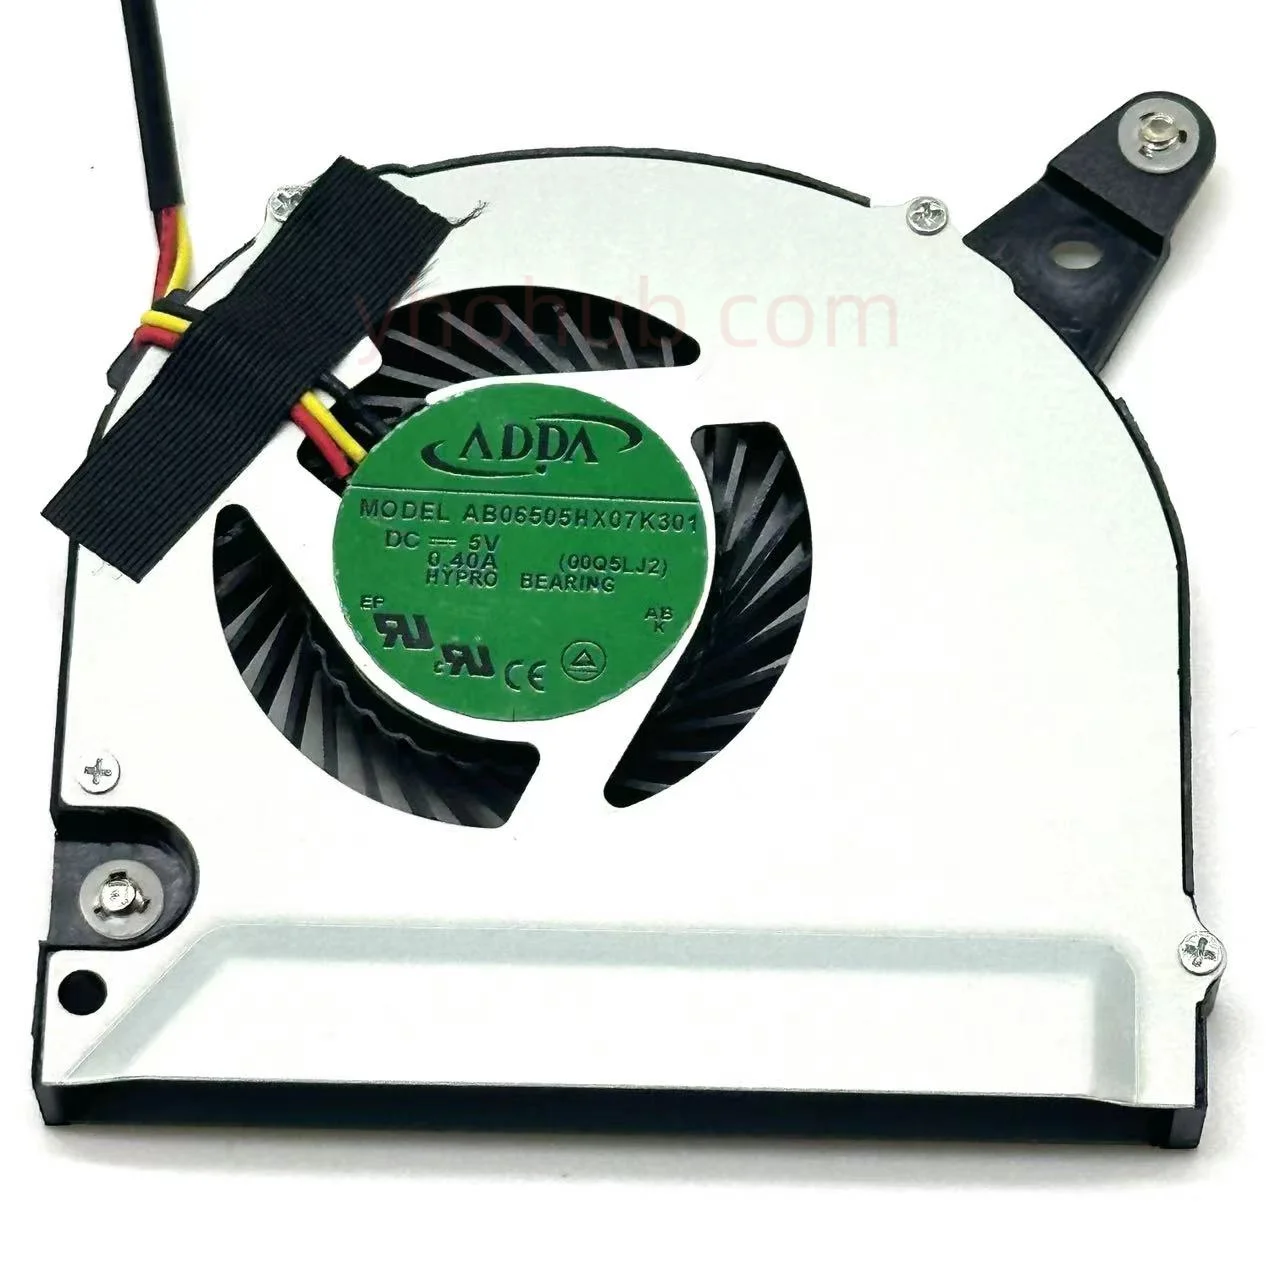 

ADDA AB06505HX07K301 00Q5LJ2 DC 5V 0.4A 3-Wire Server Cooling Fan